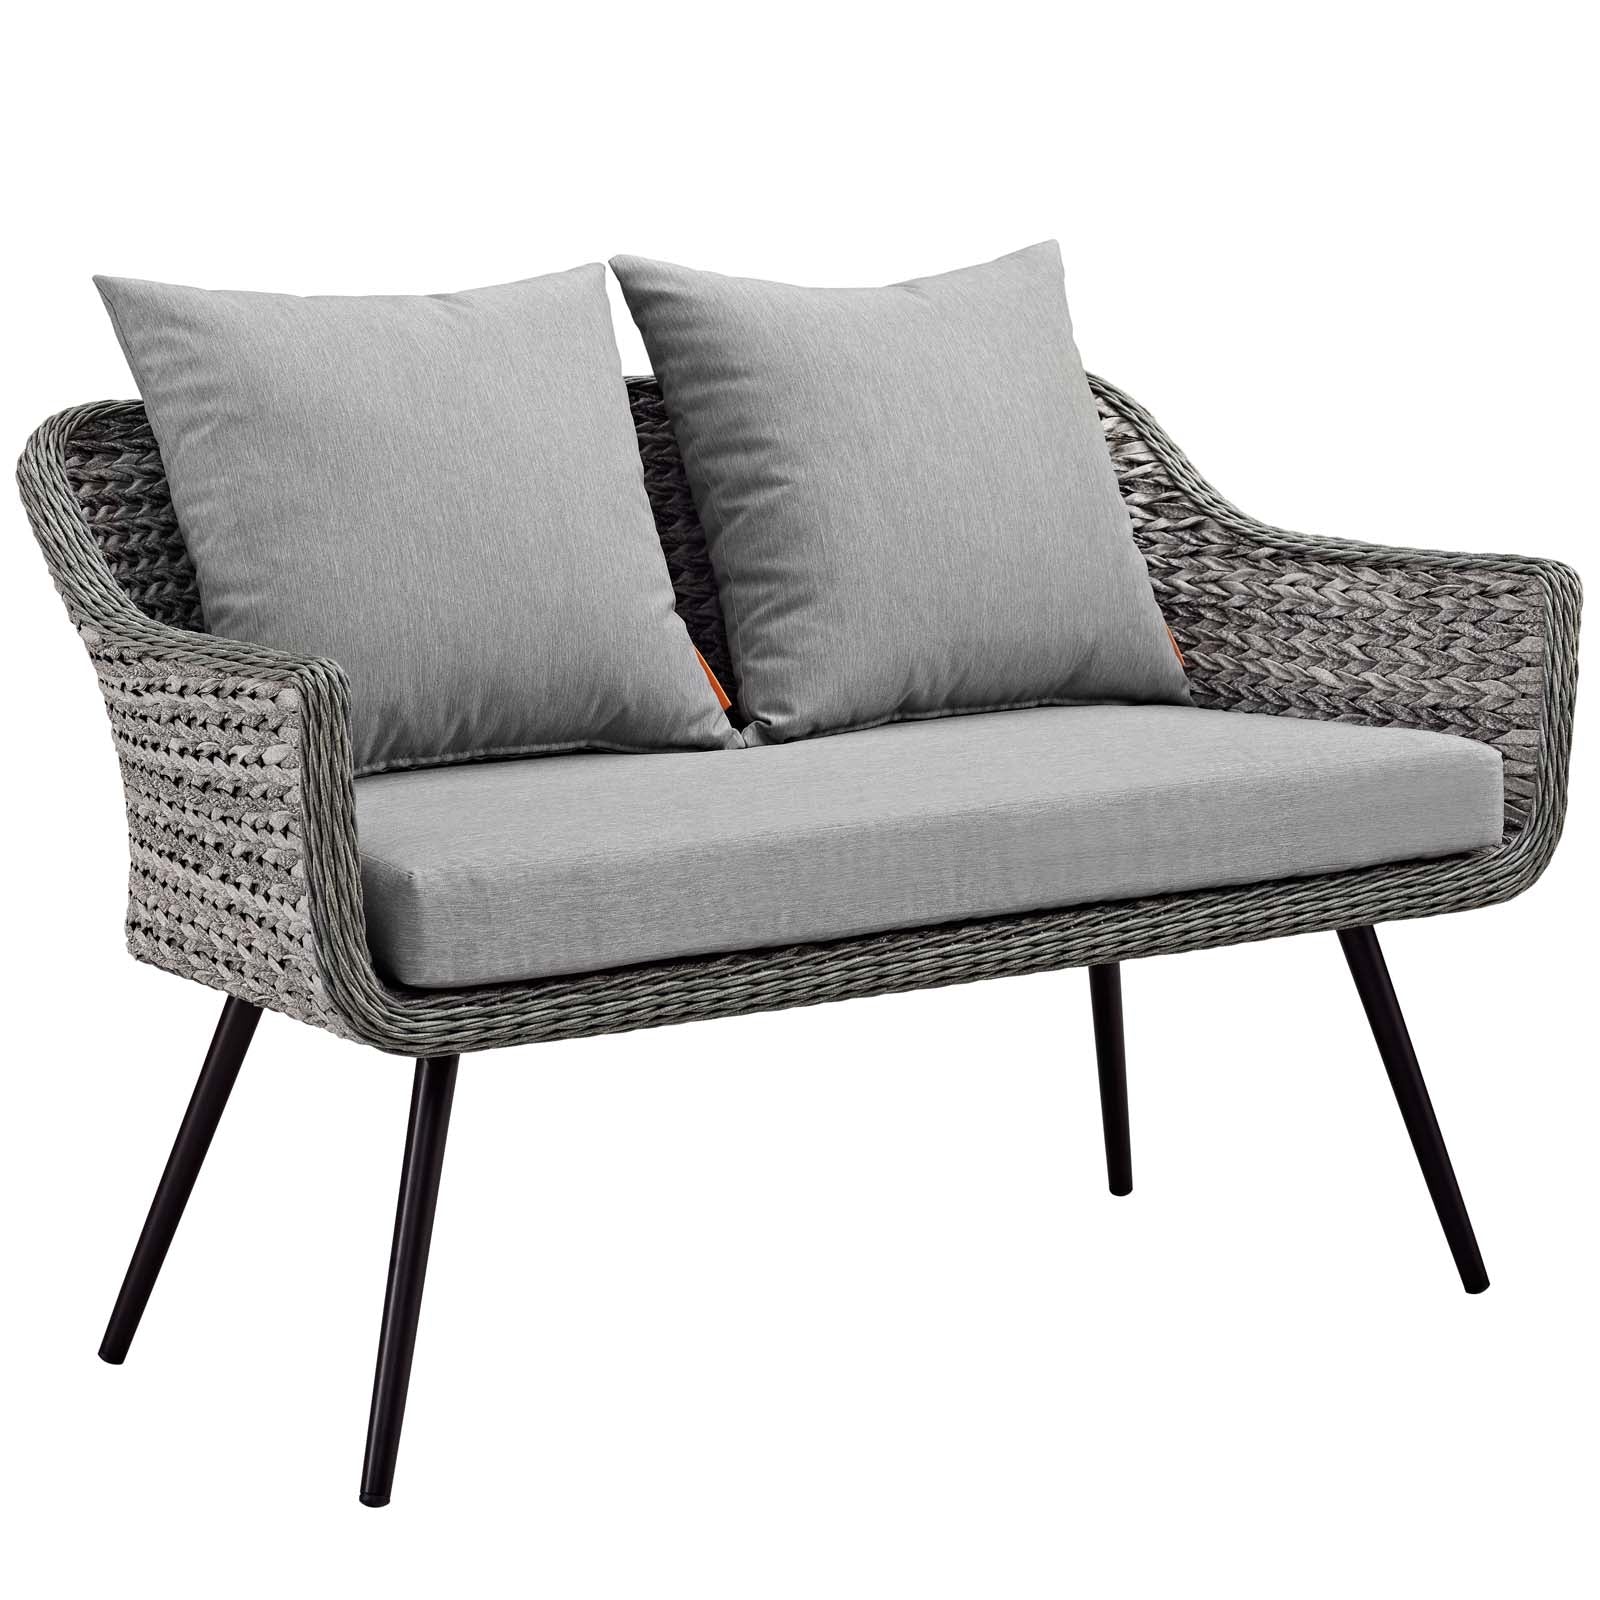 Modway Outdoor Conversation Sets - Endeavor 3-Piece Outdoor Sectional Sofa Set Gray